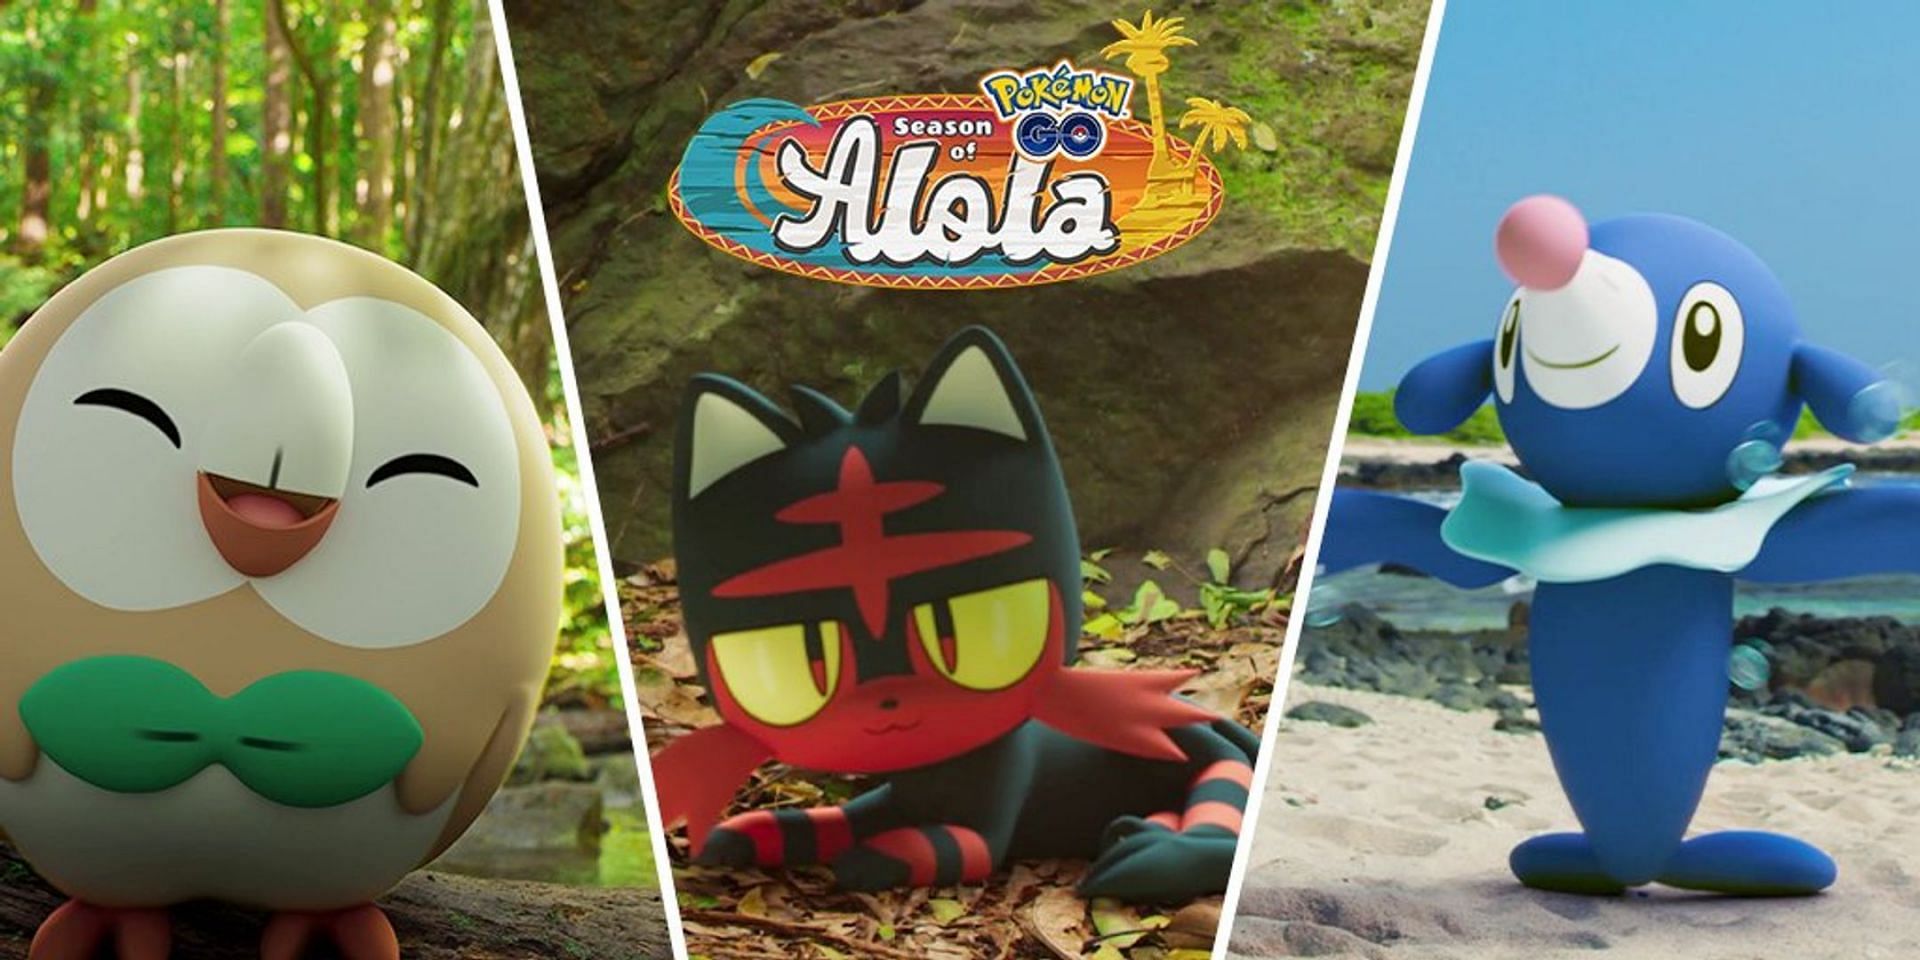 Official artwork for Pokemon GO&#039;s Season of Alola event (Image via Niantic)